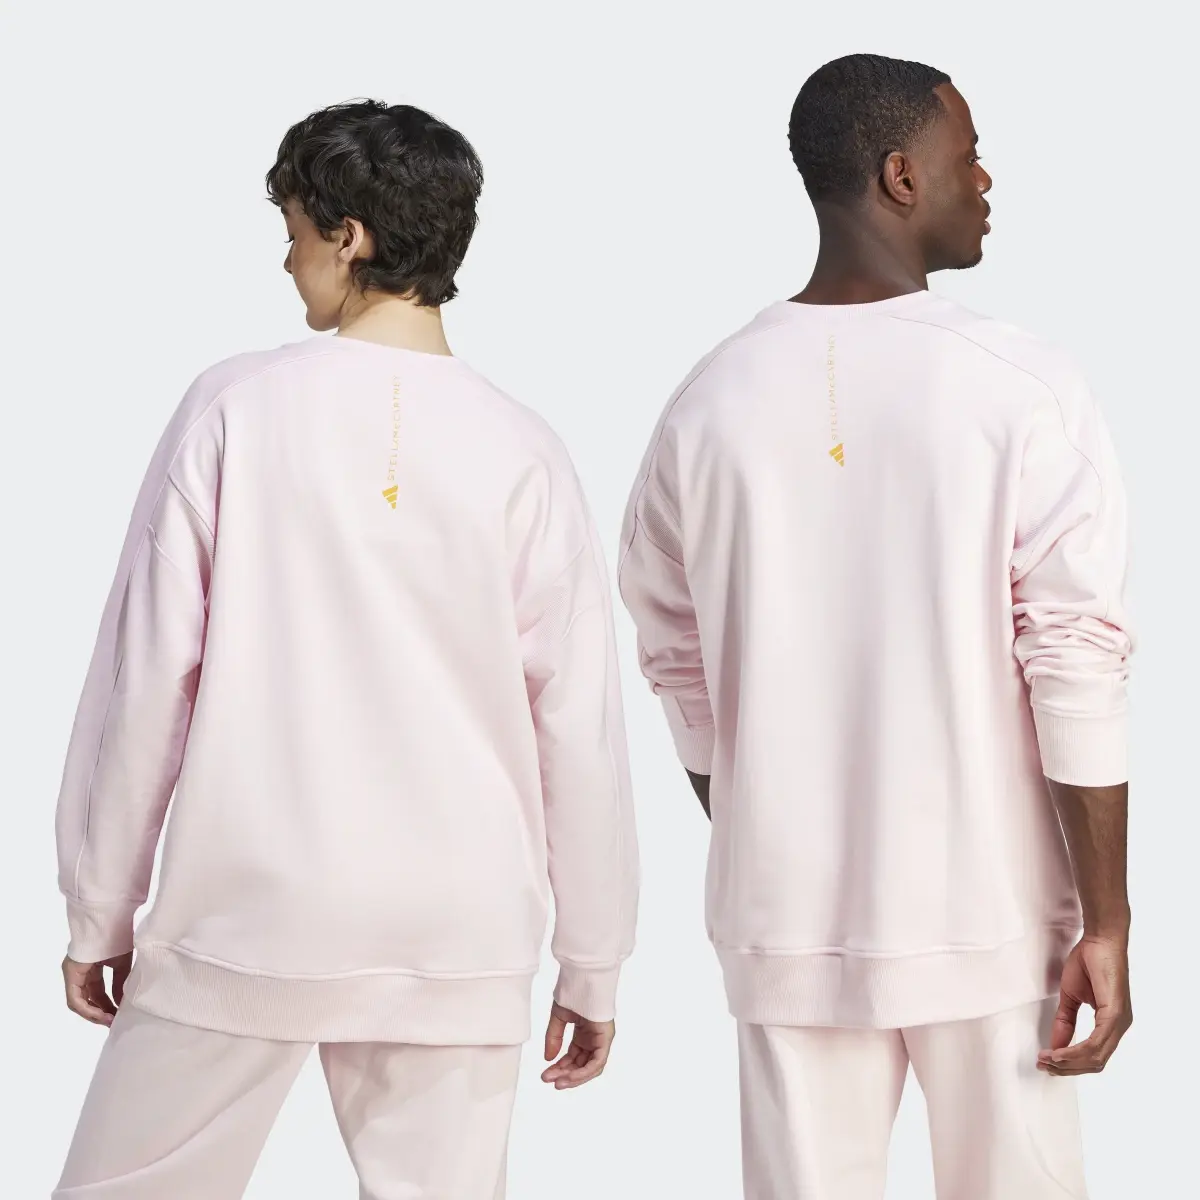 Adidas by Stella McCartney Sportswear Sweatshirt (Gender Neutral). 3